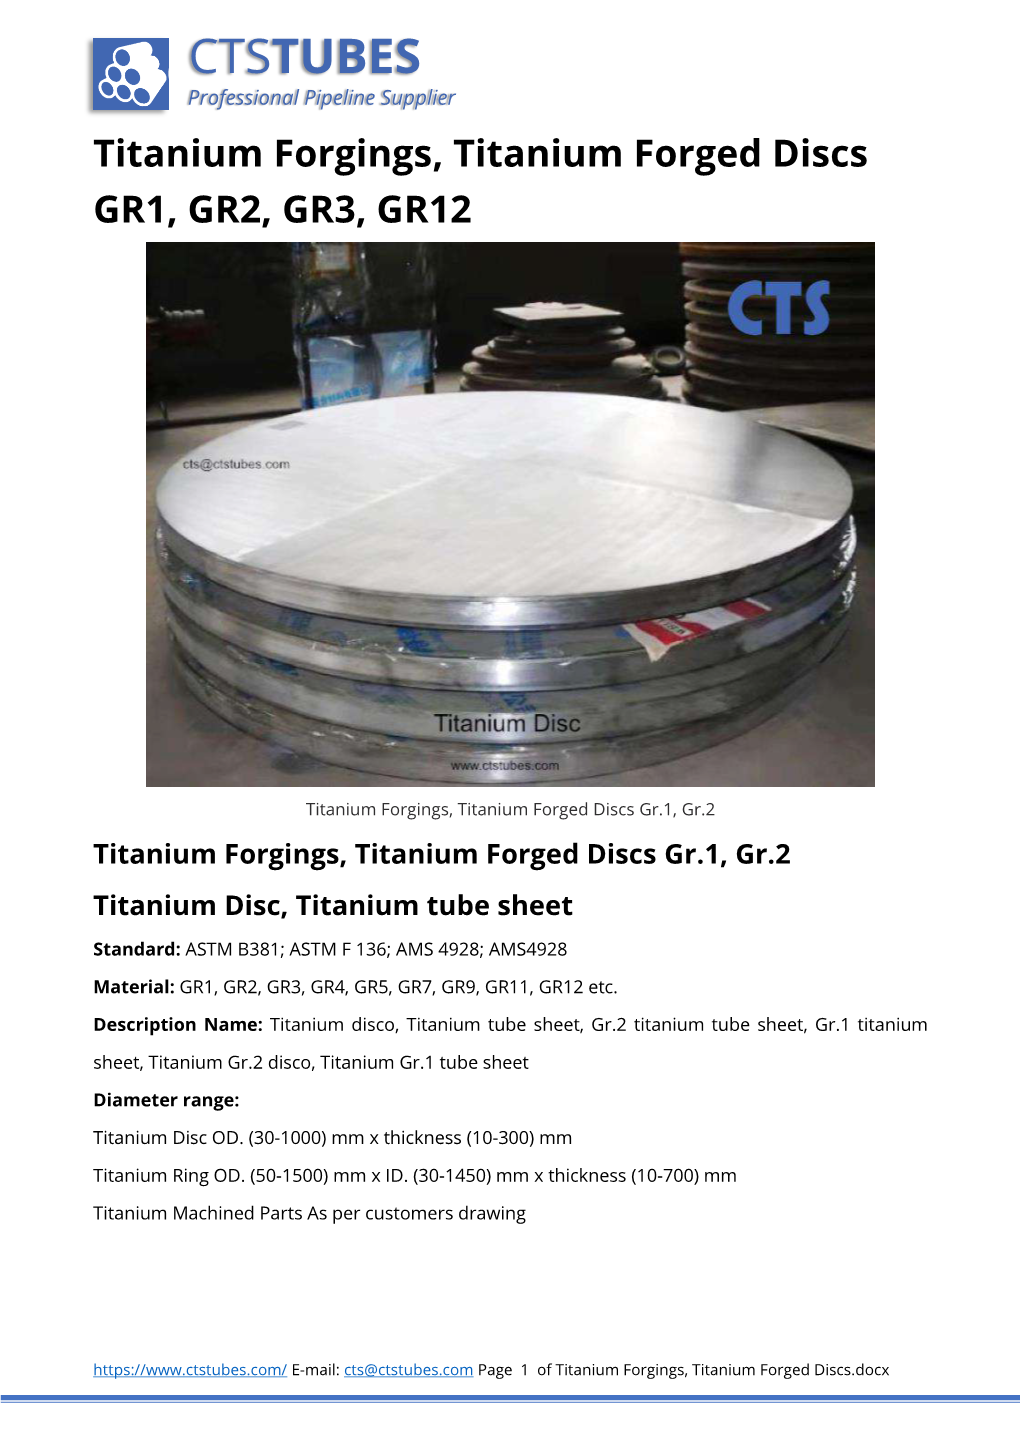 Titanium Tube Sheet